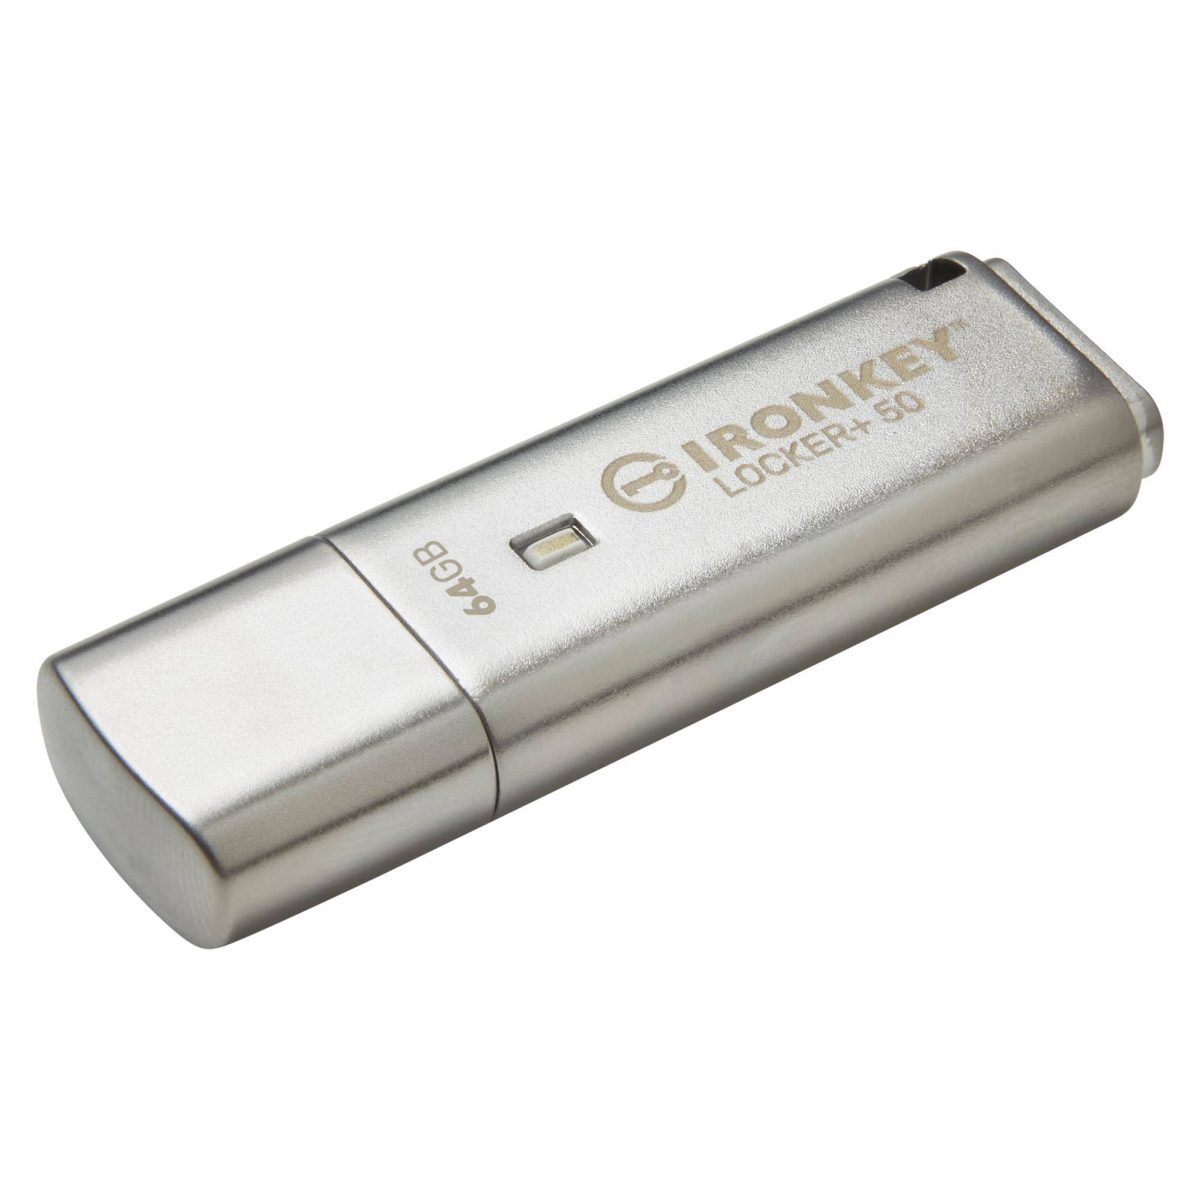 Kingston IronKey  Locker+ 50 Encrypted USB  IKLP50/64GB